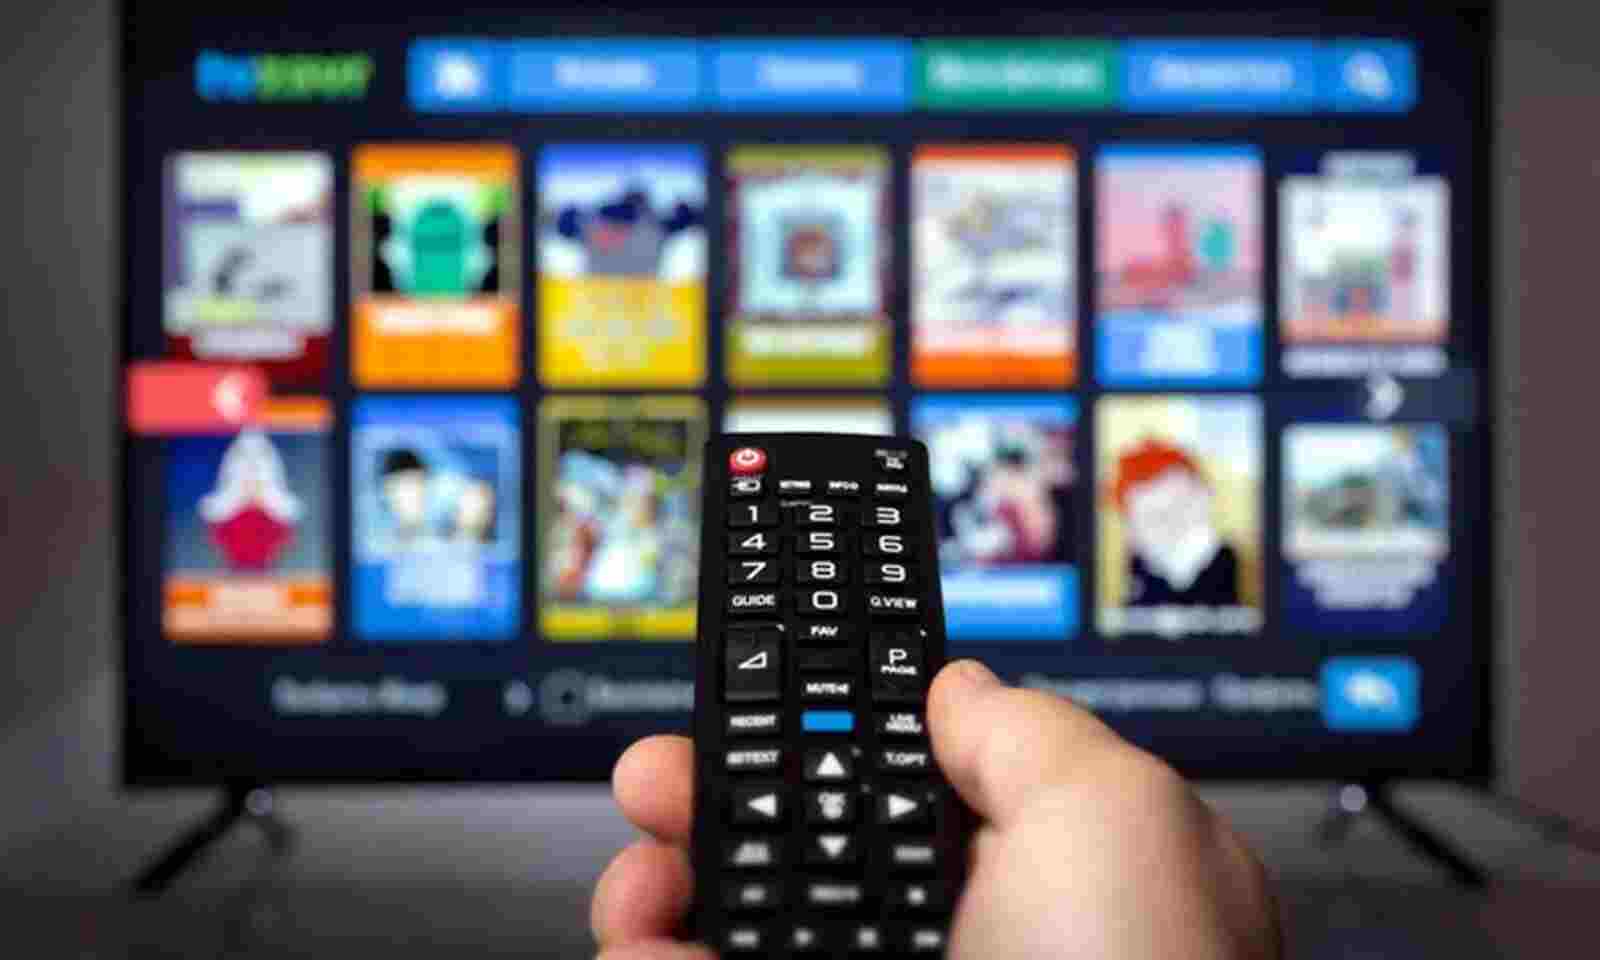 Keg investigates airtel digital tv, dad play, dish tv, and sun direct by 2022 - inventiva